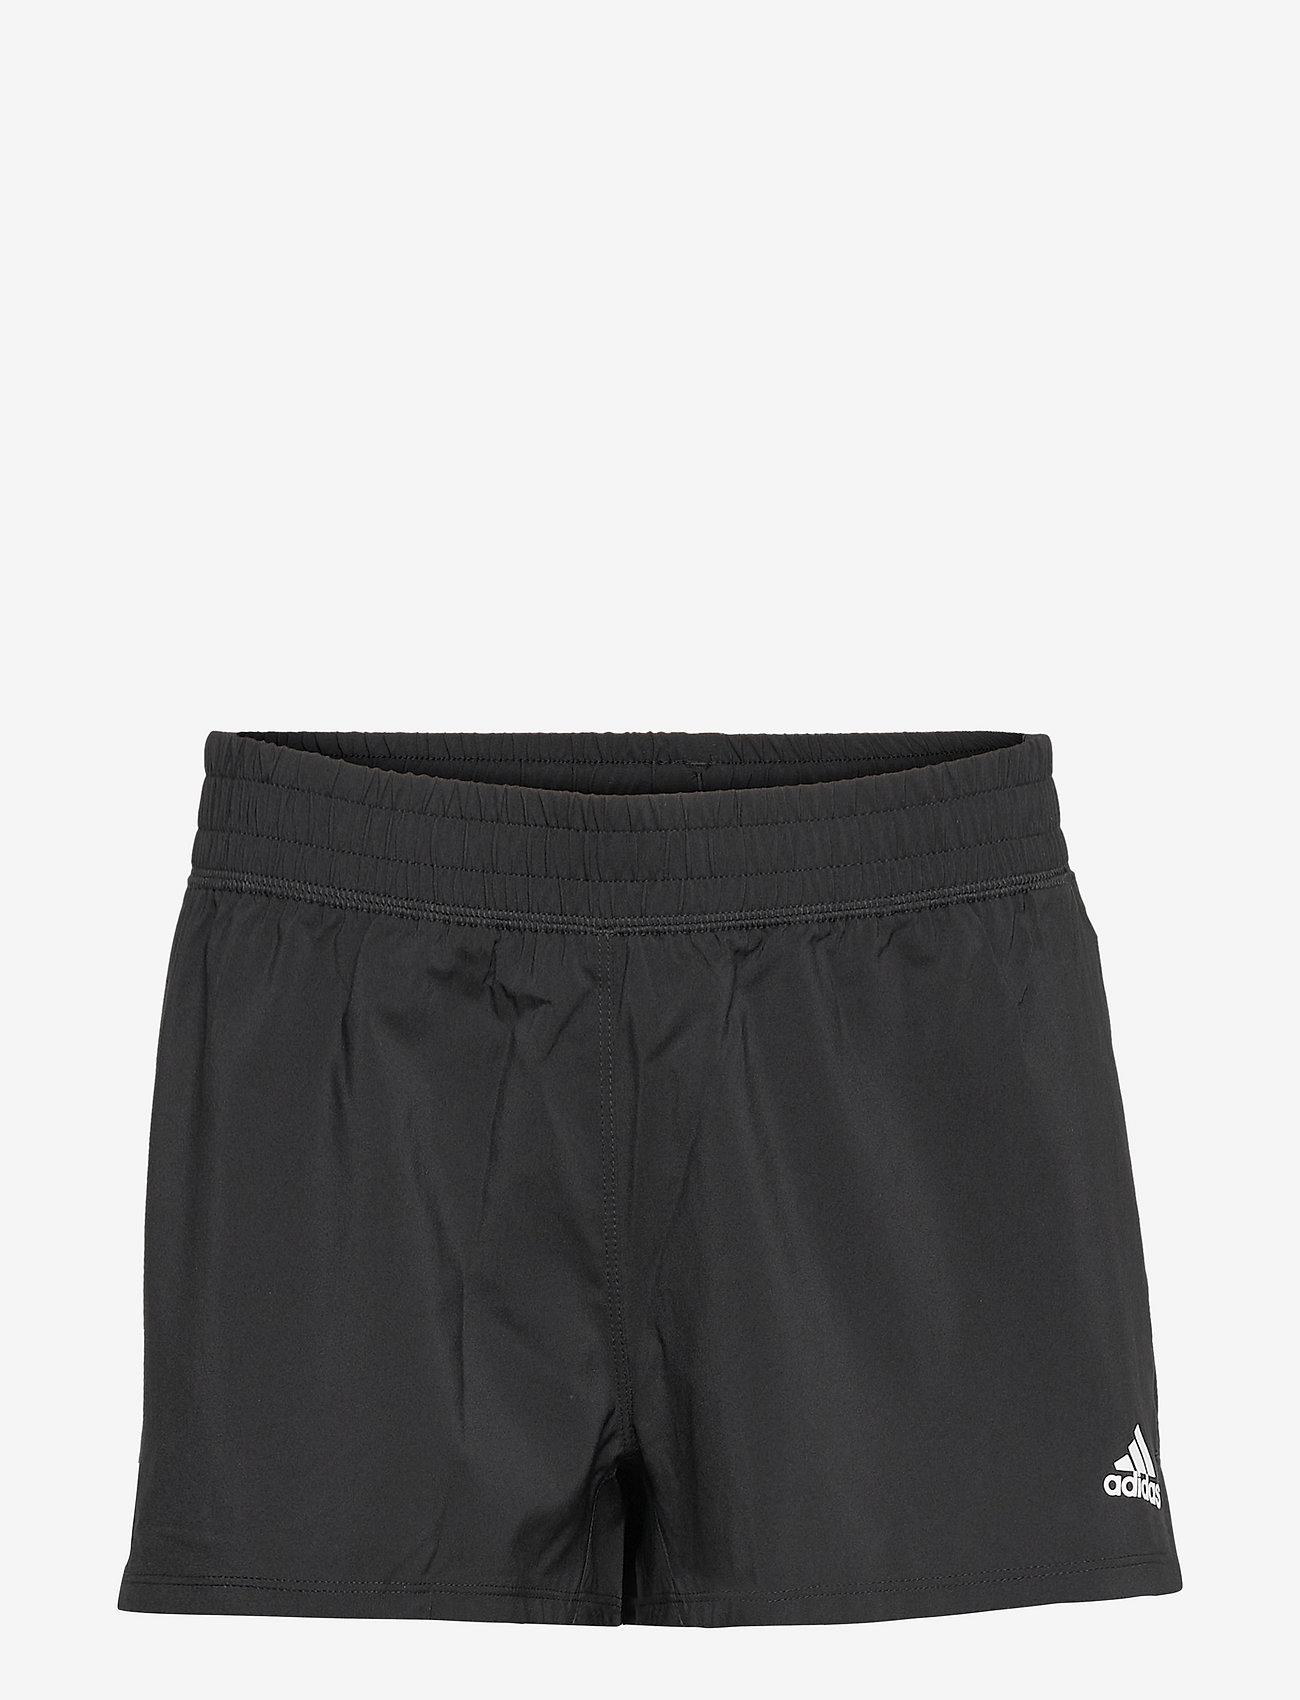 adidas Performance - PACER 3S WVN - trainings-shorts - black/white - 0